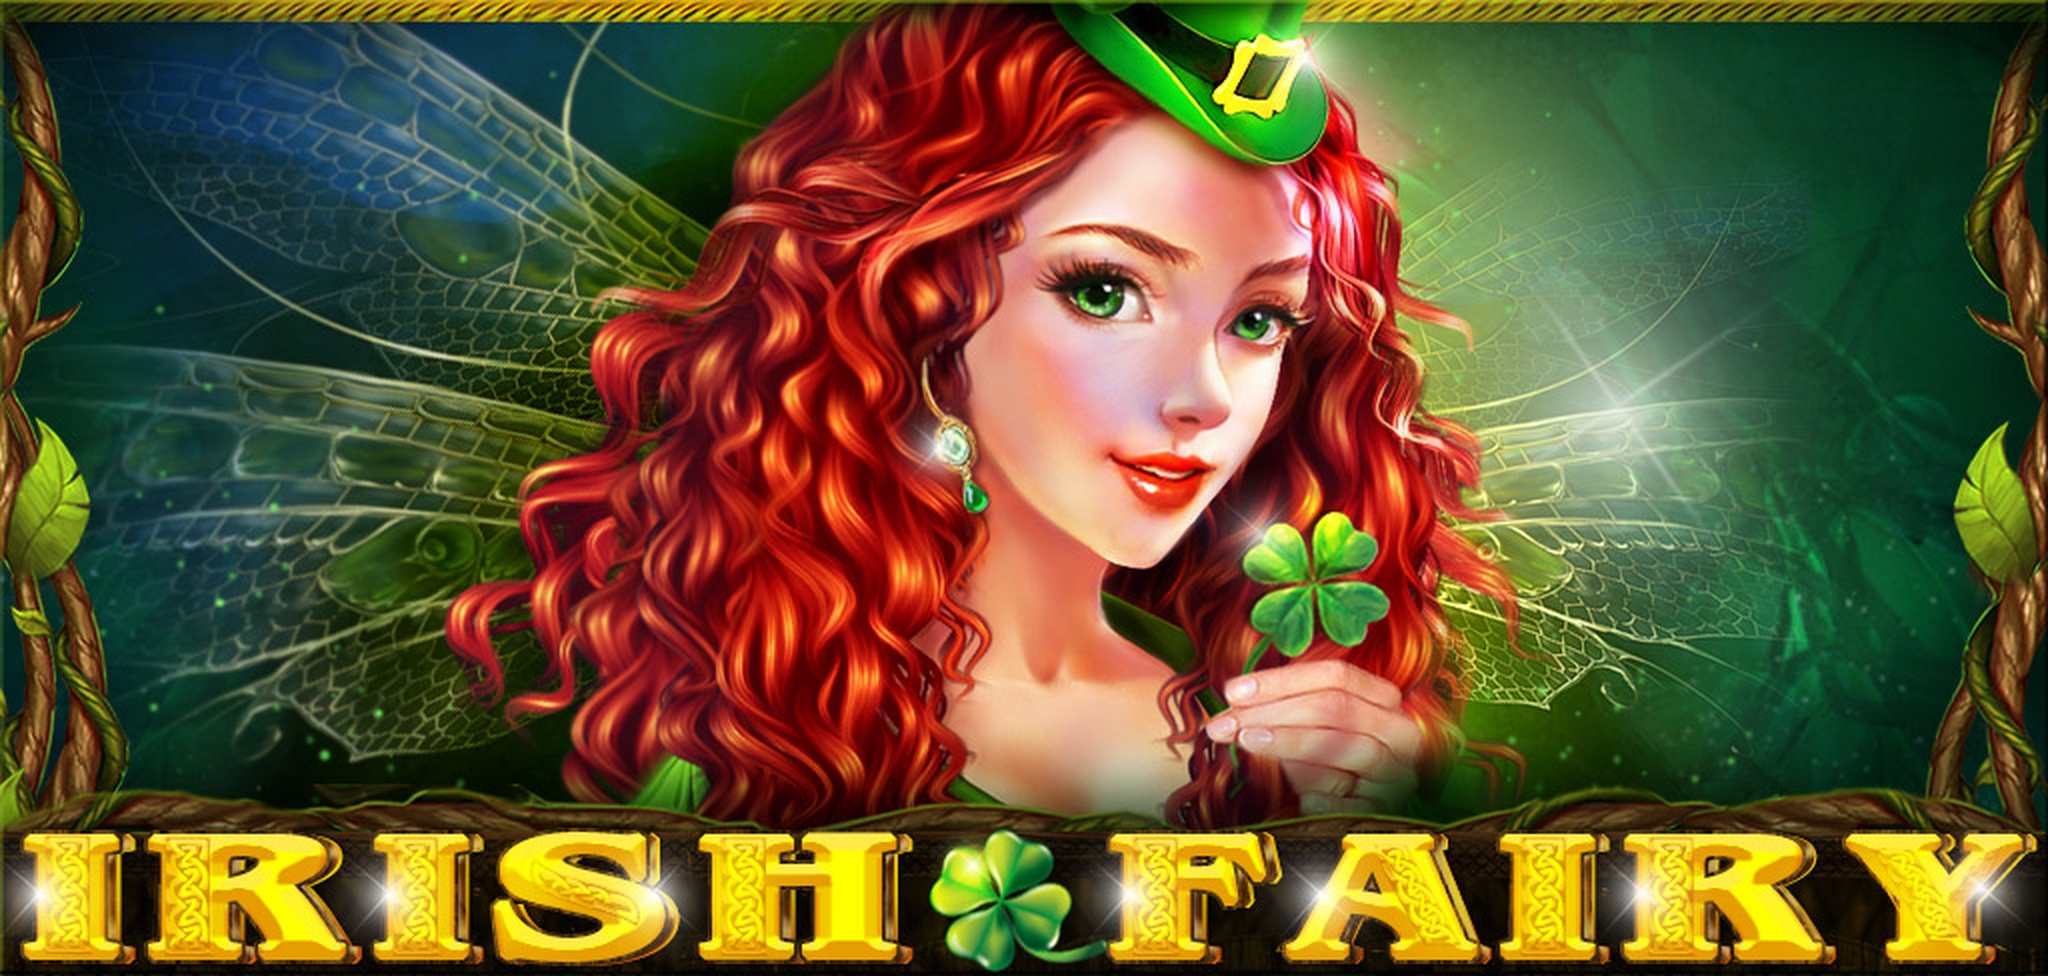 The Irish Fairy Online Slot Demo Game by casino technology